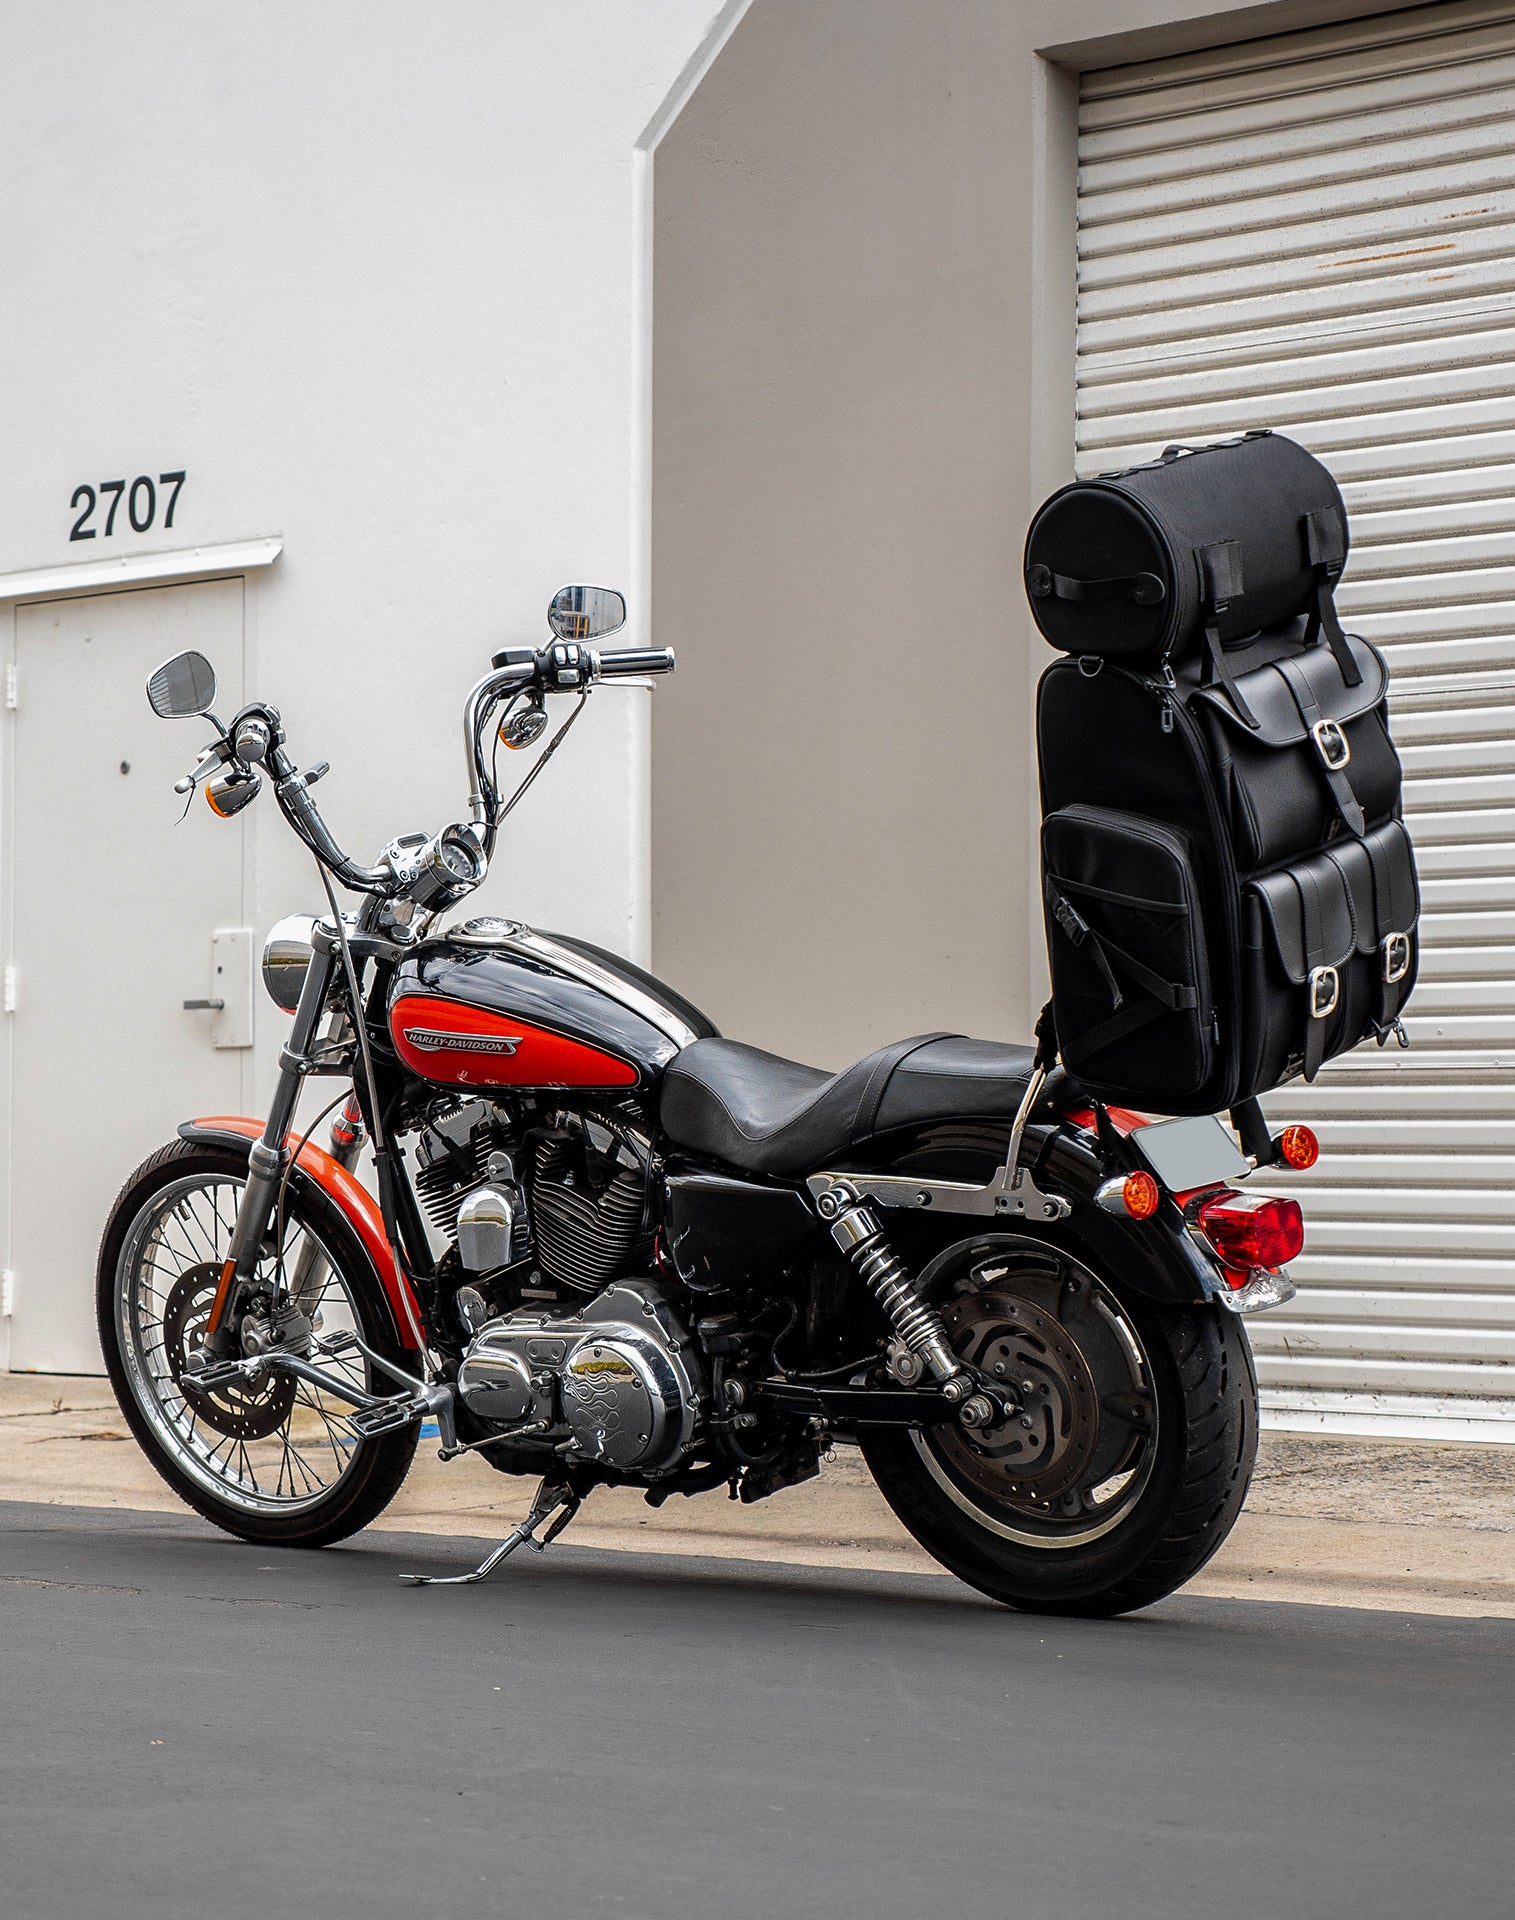 55L - Highway Extra Large Plain Kawasaki Motorcycle Tail Bag